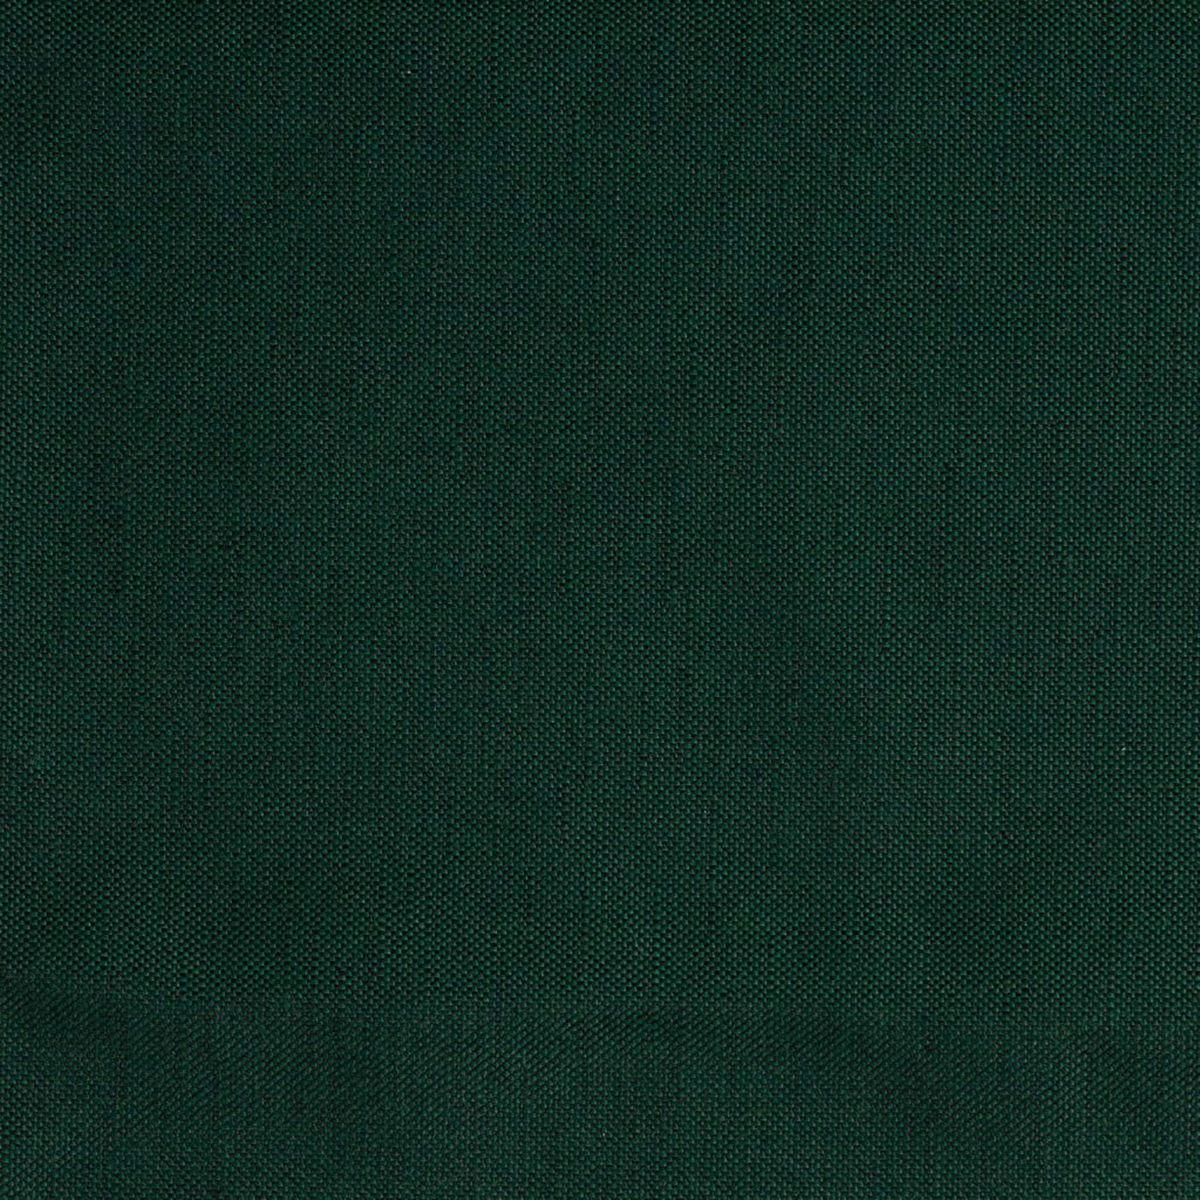 linen mallard dark cushion for croquet chaise lounge without wheel thumbnail image